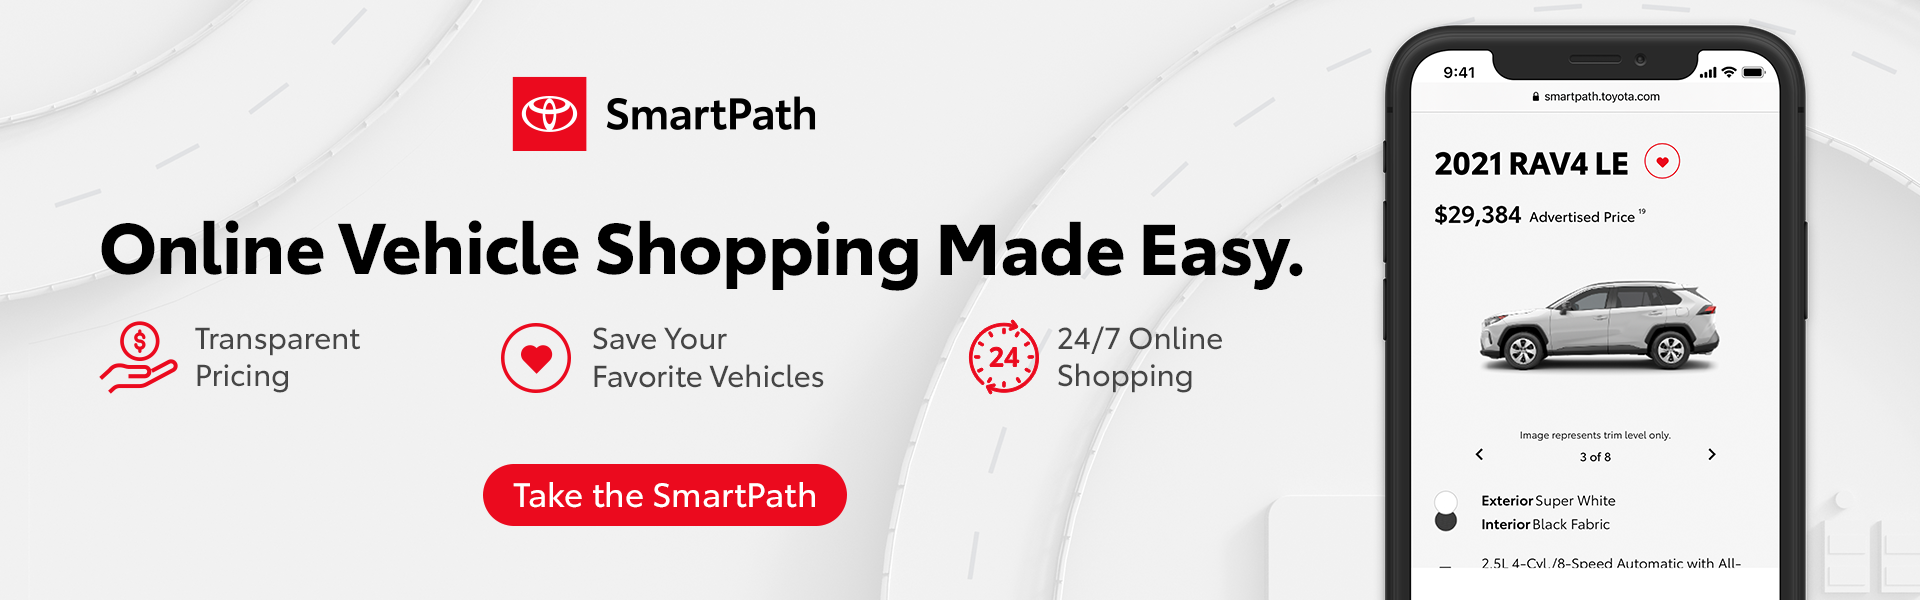 Toyota Smart Path